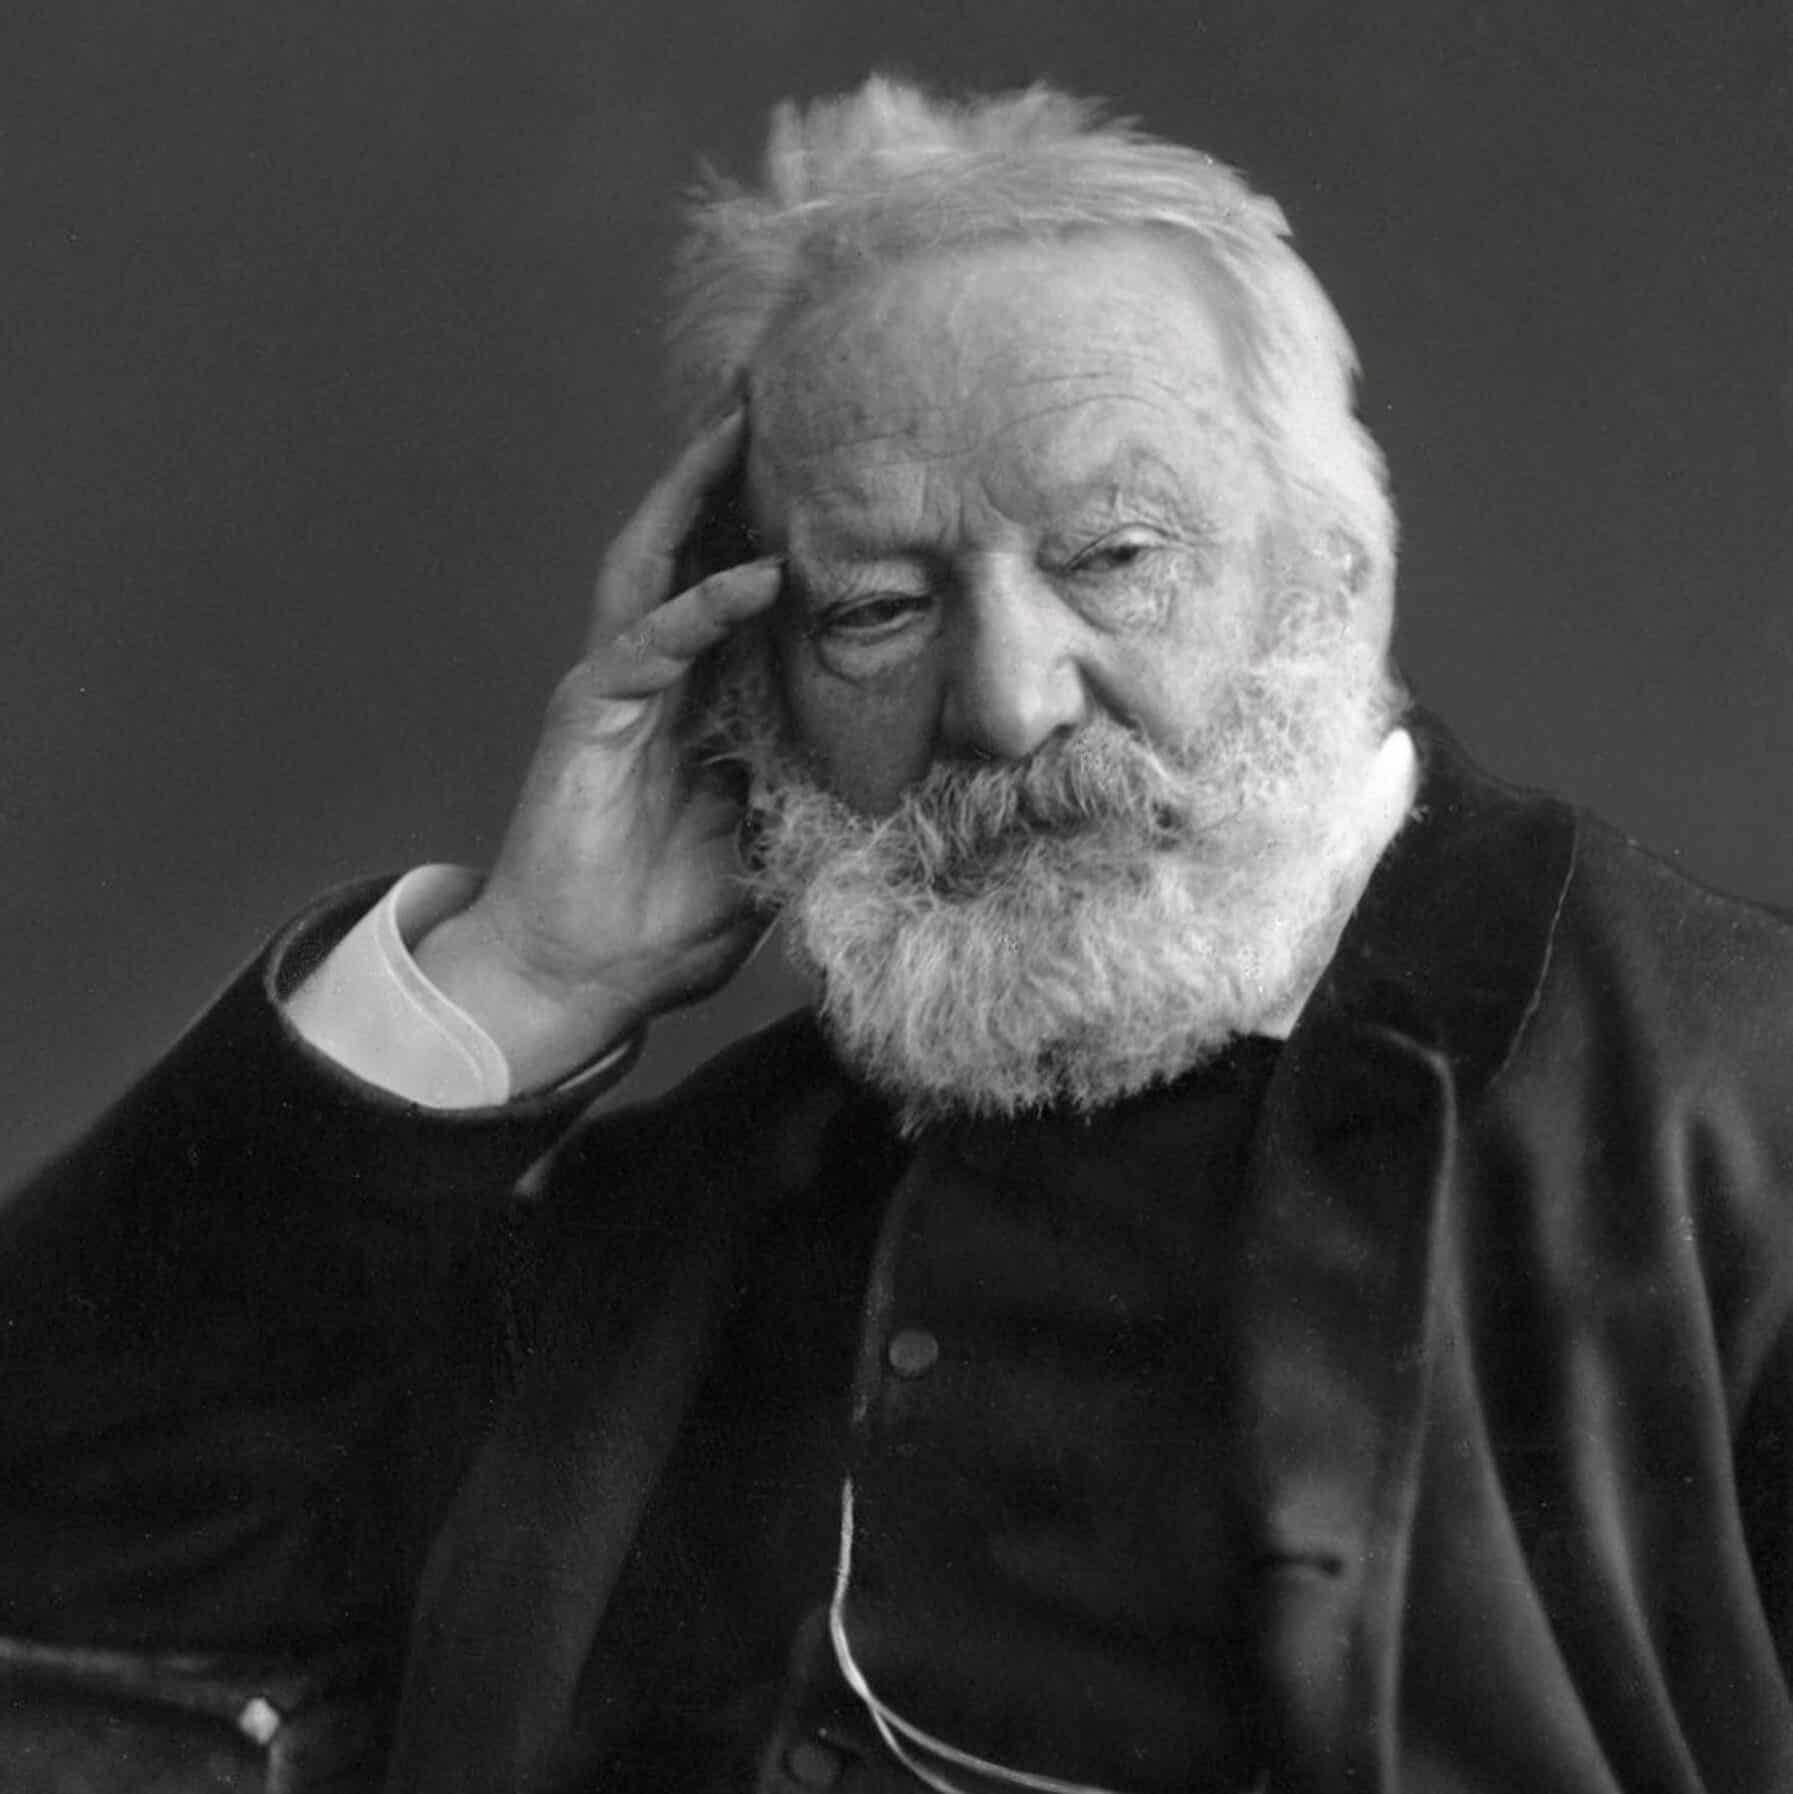 Victor Hugo pensif